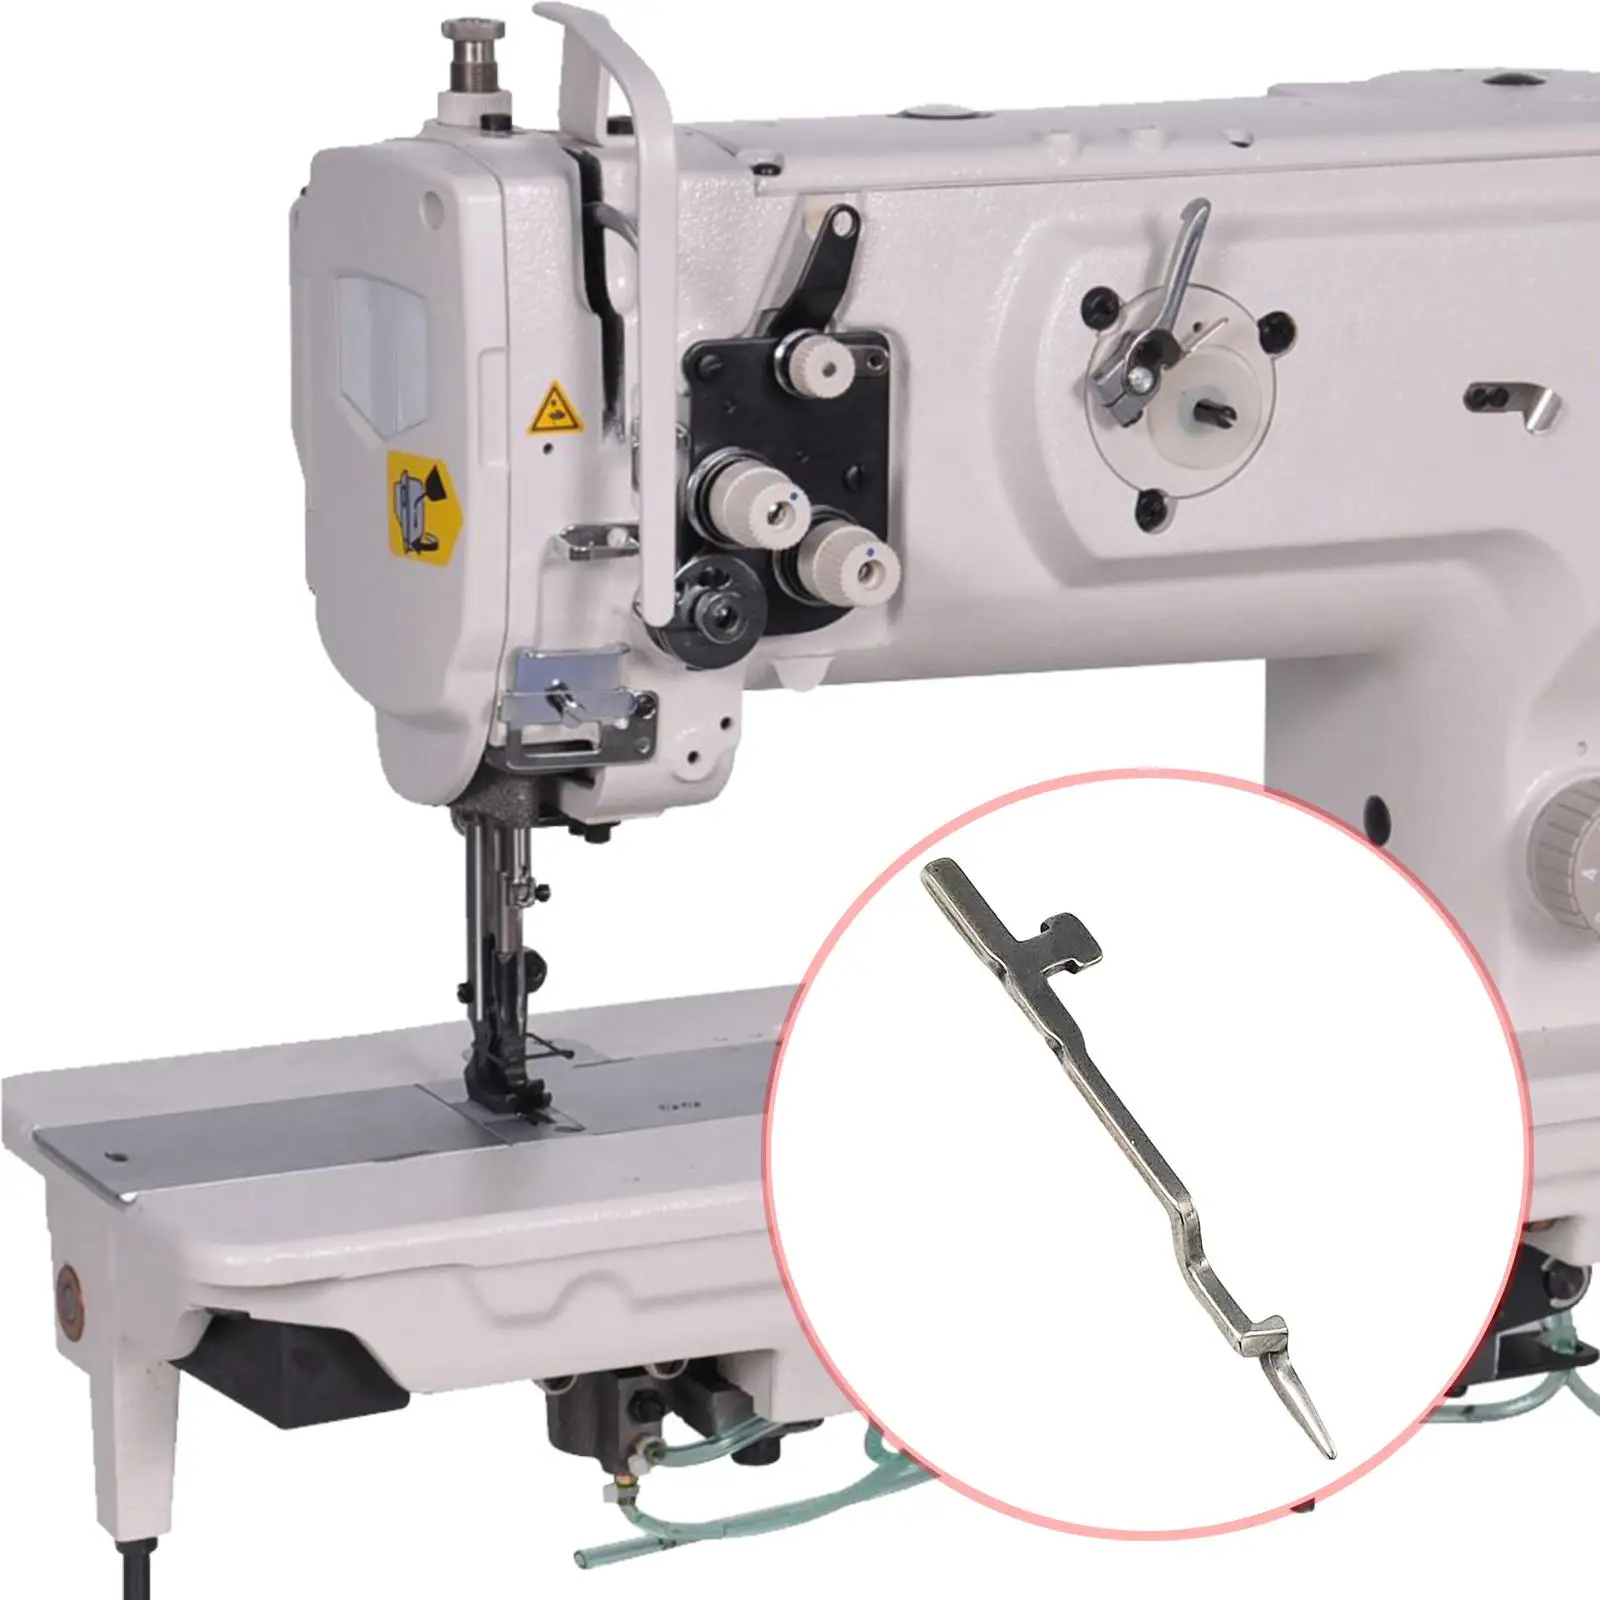 1 Piece Overlock Lower loop Replacement Easy to Use Sewing Machine Overlock loop